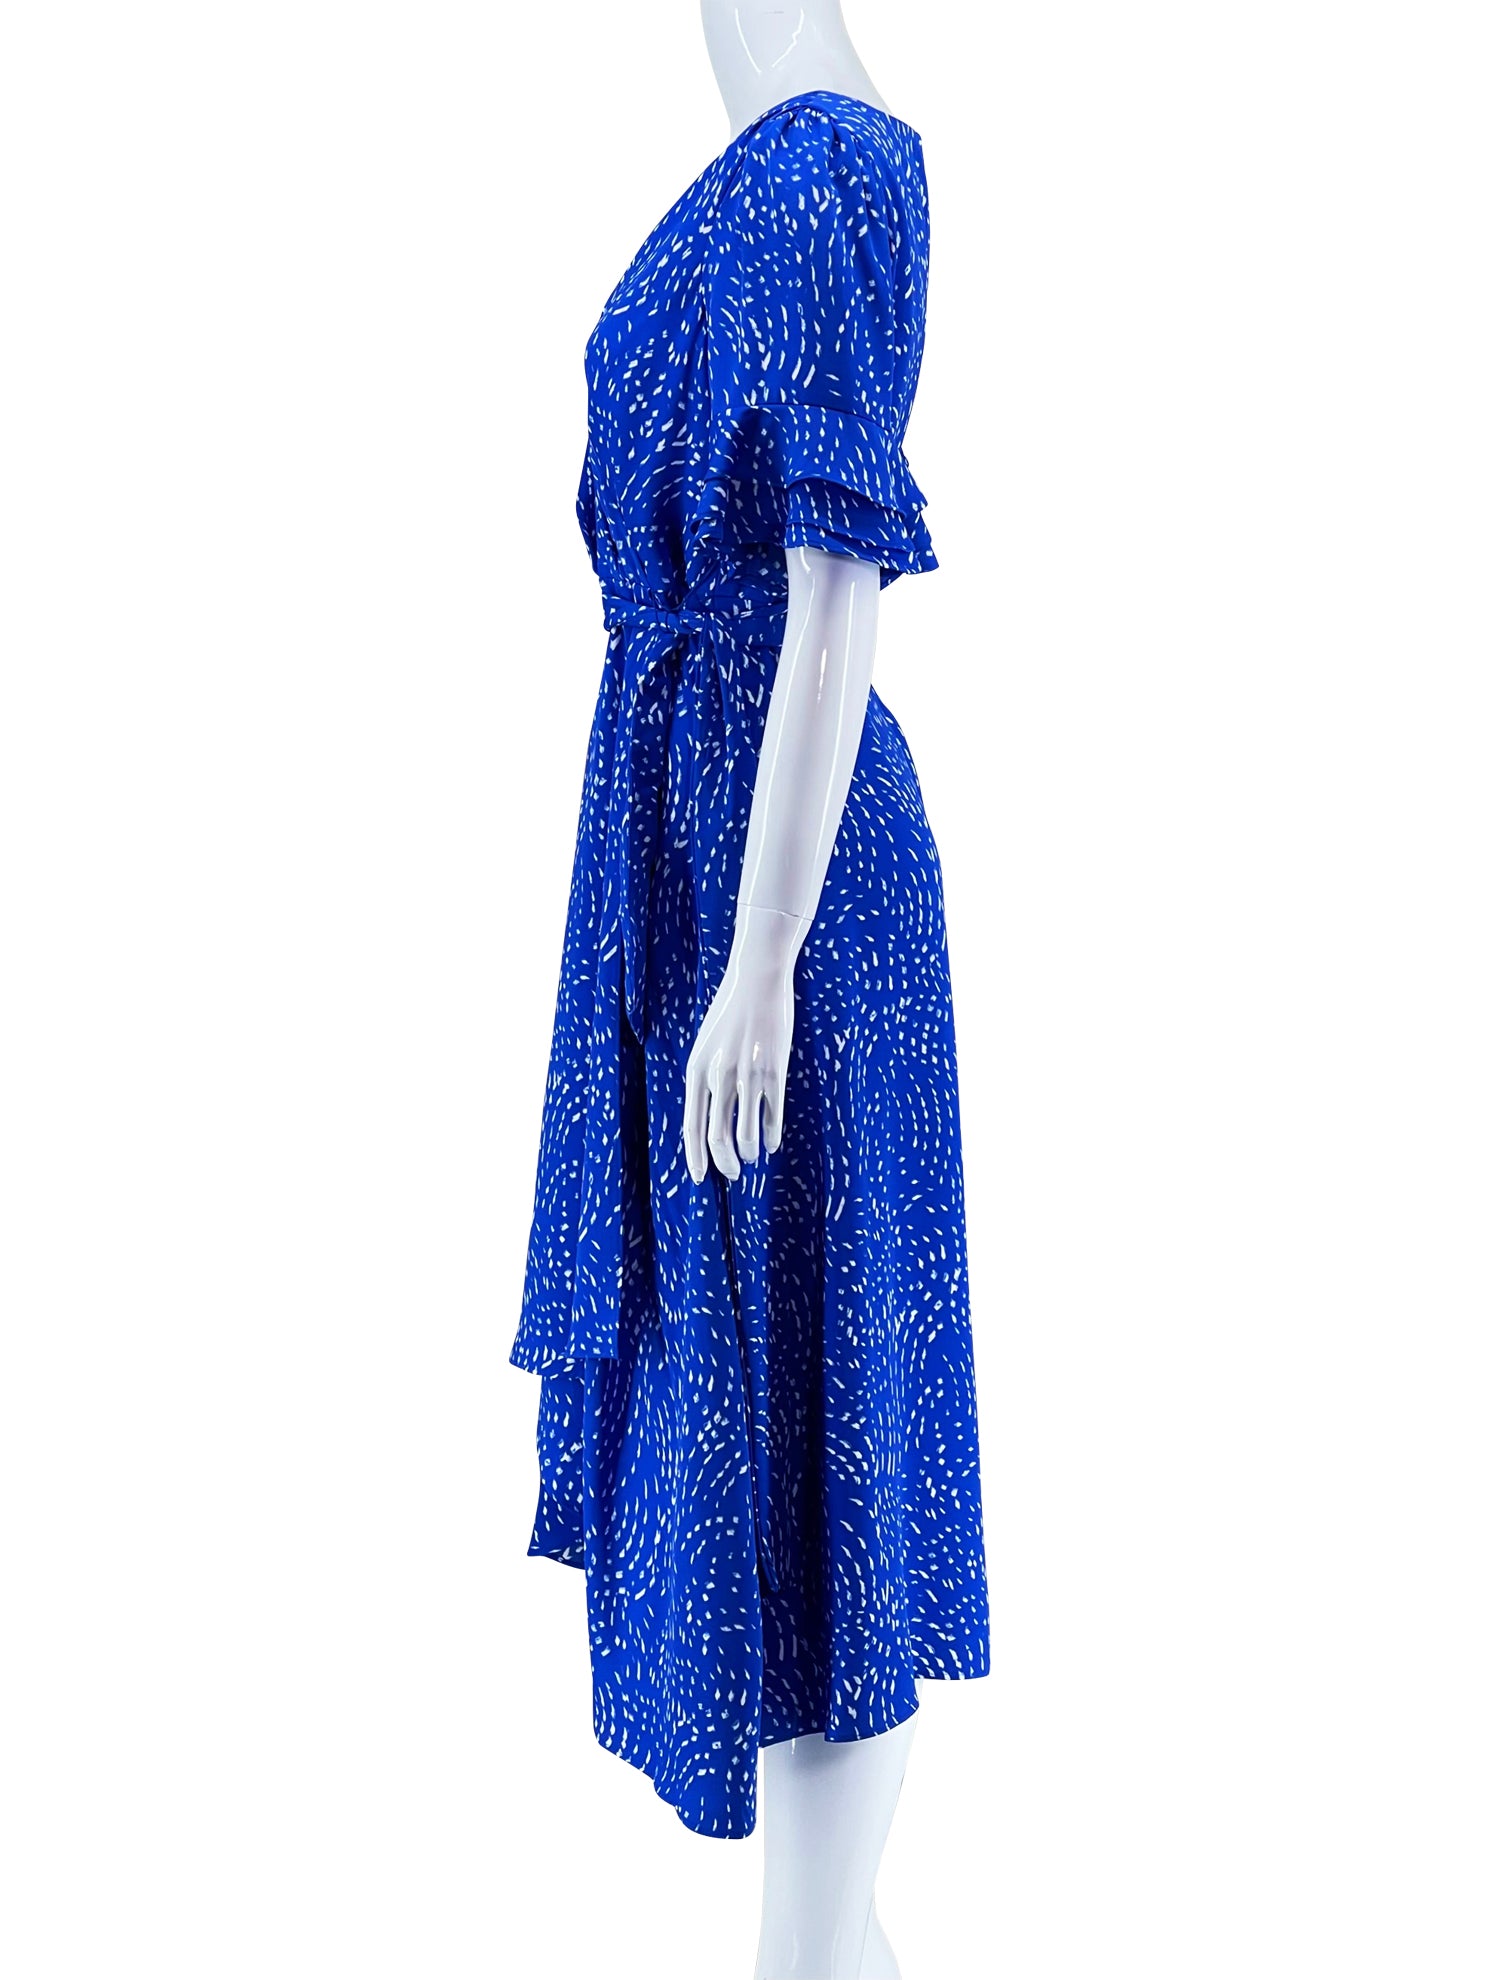 DKNY Blue & White Printed Wrap Dress